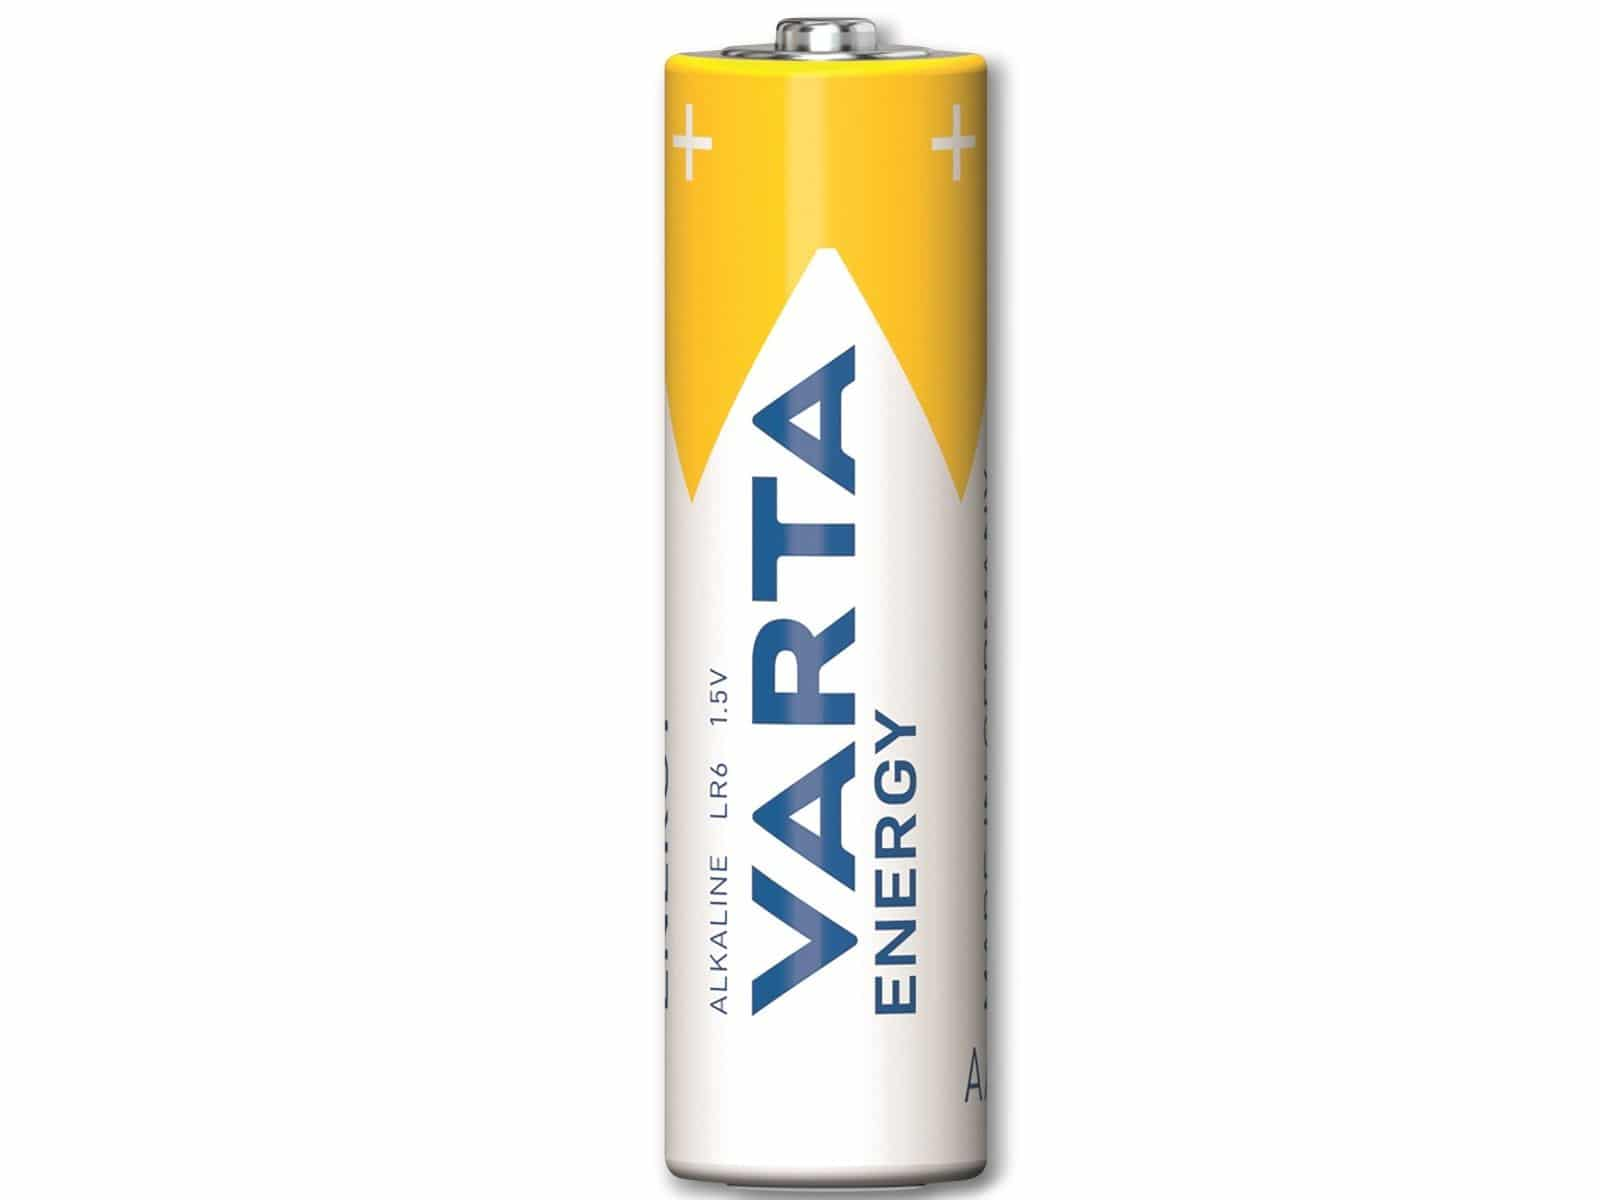 LR06, Mignon, Batterie Alkaline, Energy, Stück 1.5V, Batterien VARTA 8 Alkaline AA,